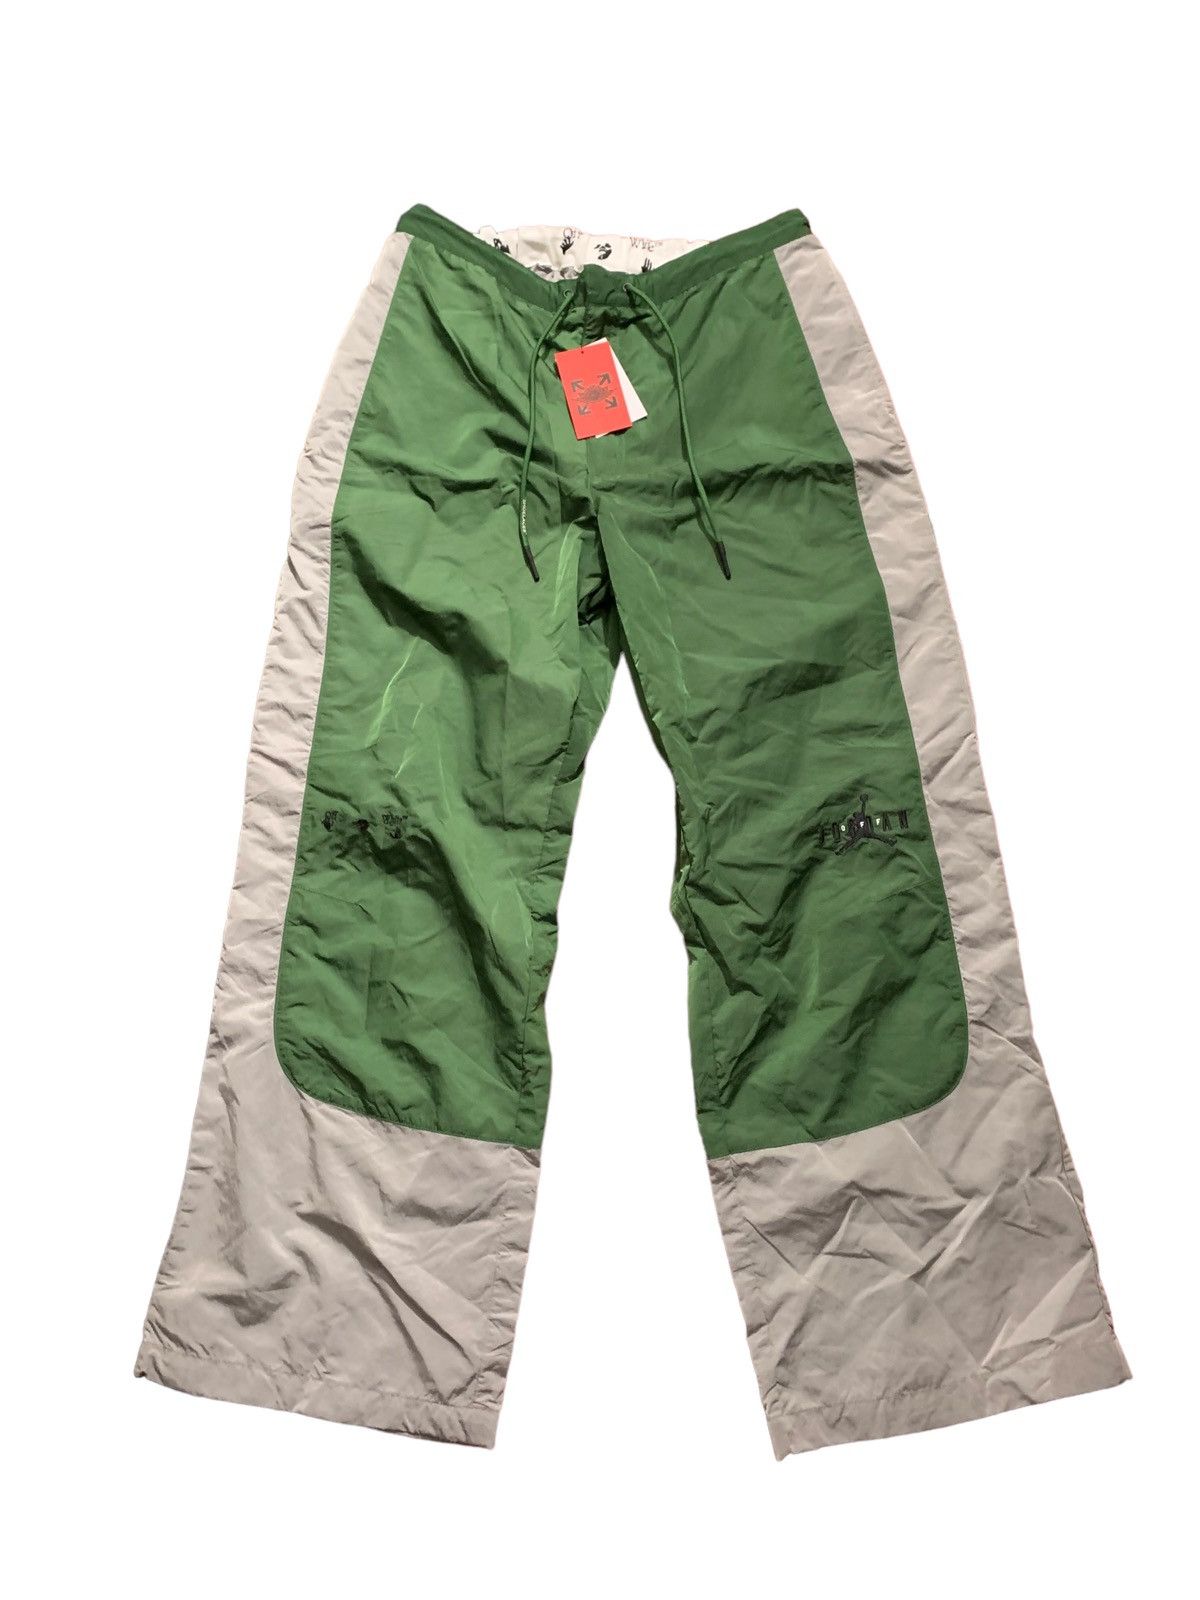 Jordan Brand Off White Jordan Track Pants in Grey Green Size US 34 / EU 50 - 1 Preview